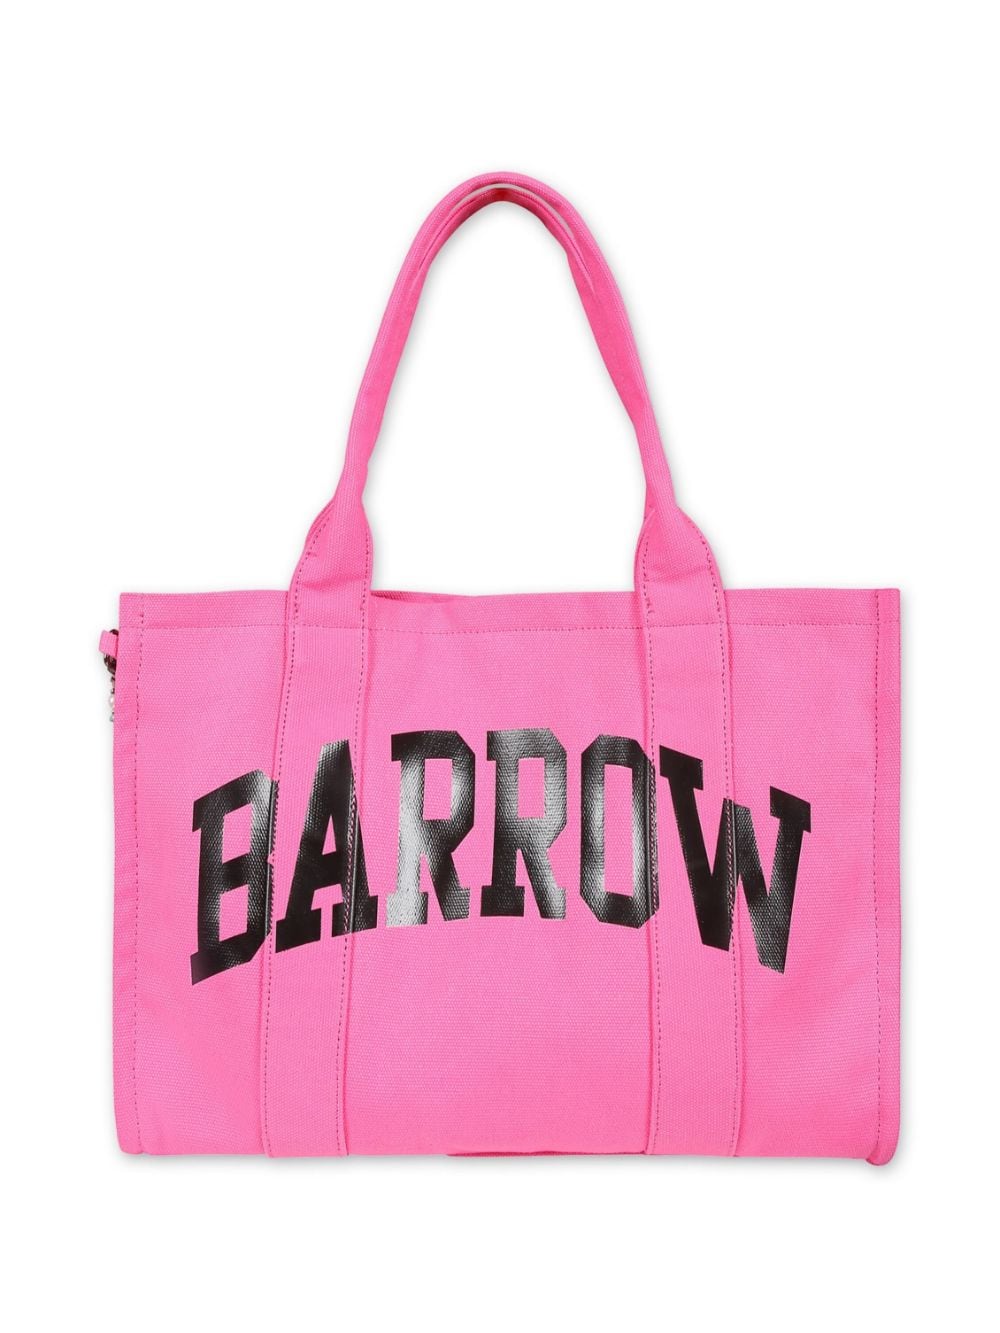 Barrow kids logo-print wrist bag - Rosa